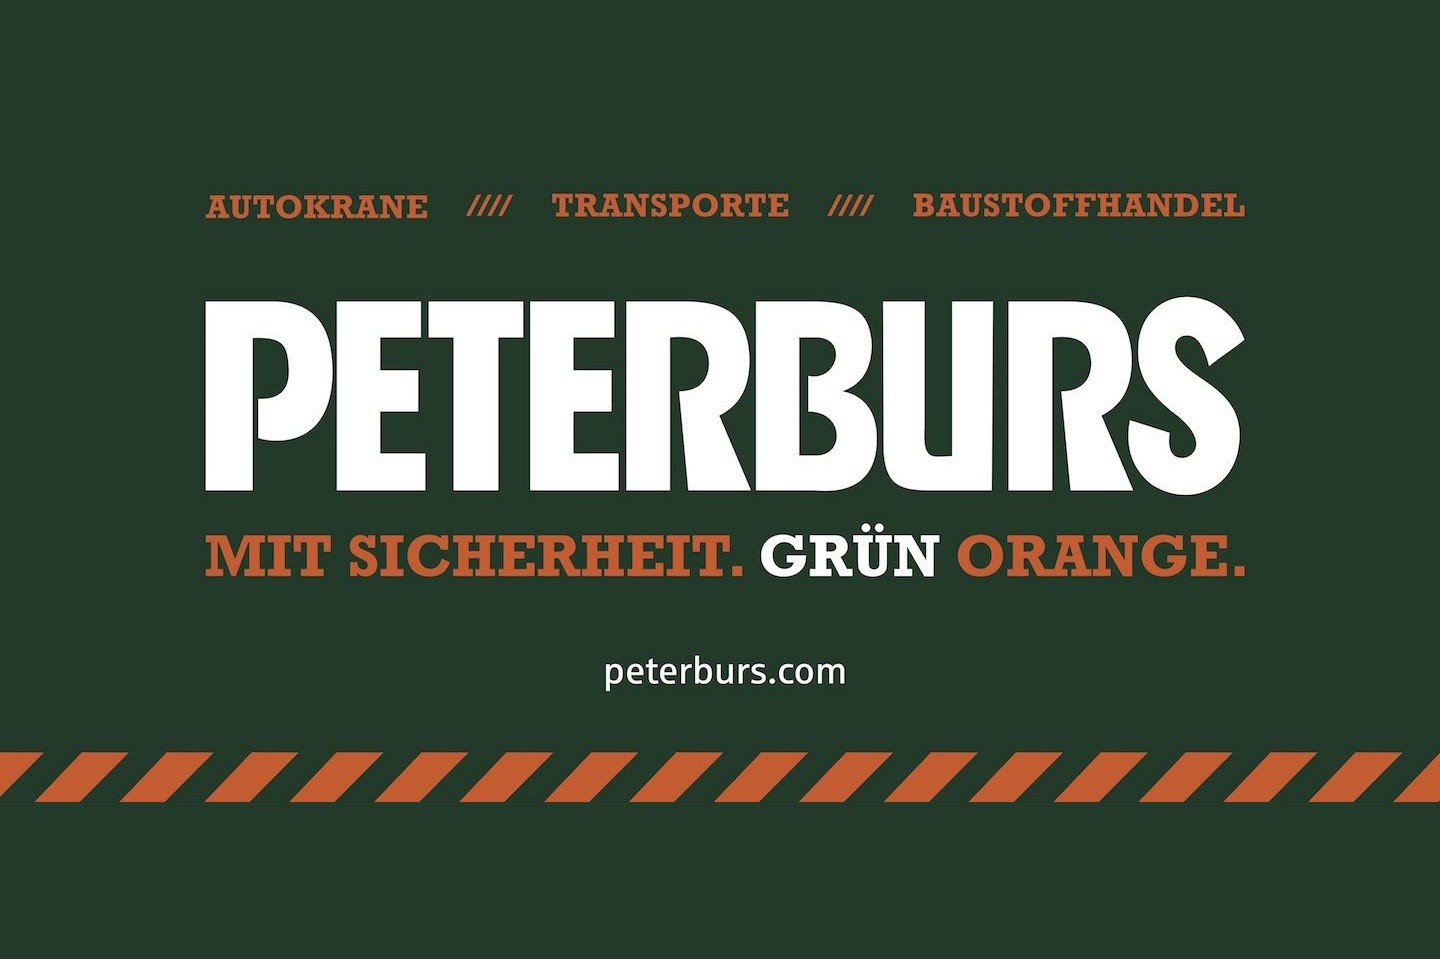 Peterburs Autokrane Transporte Baustoffhandel